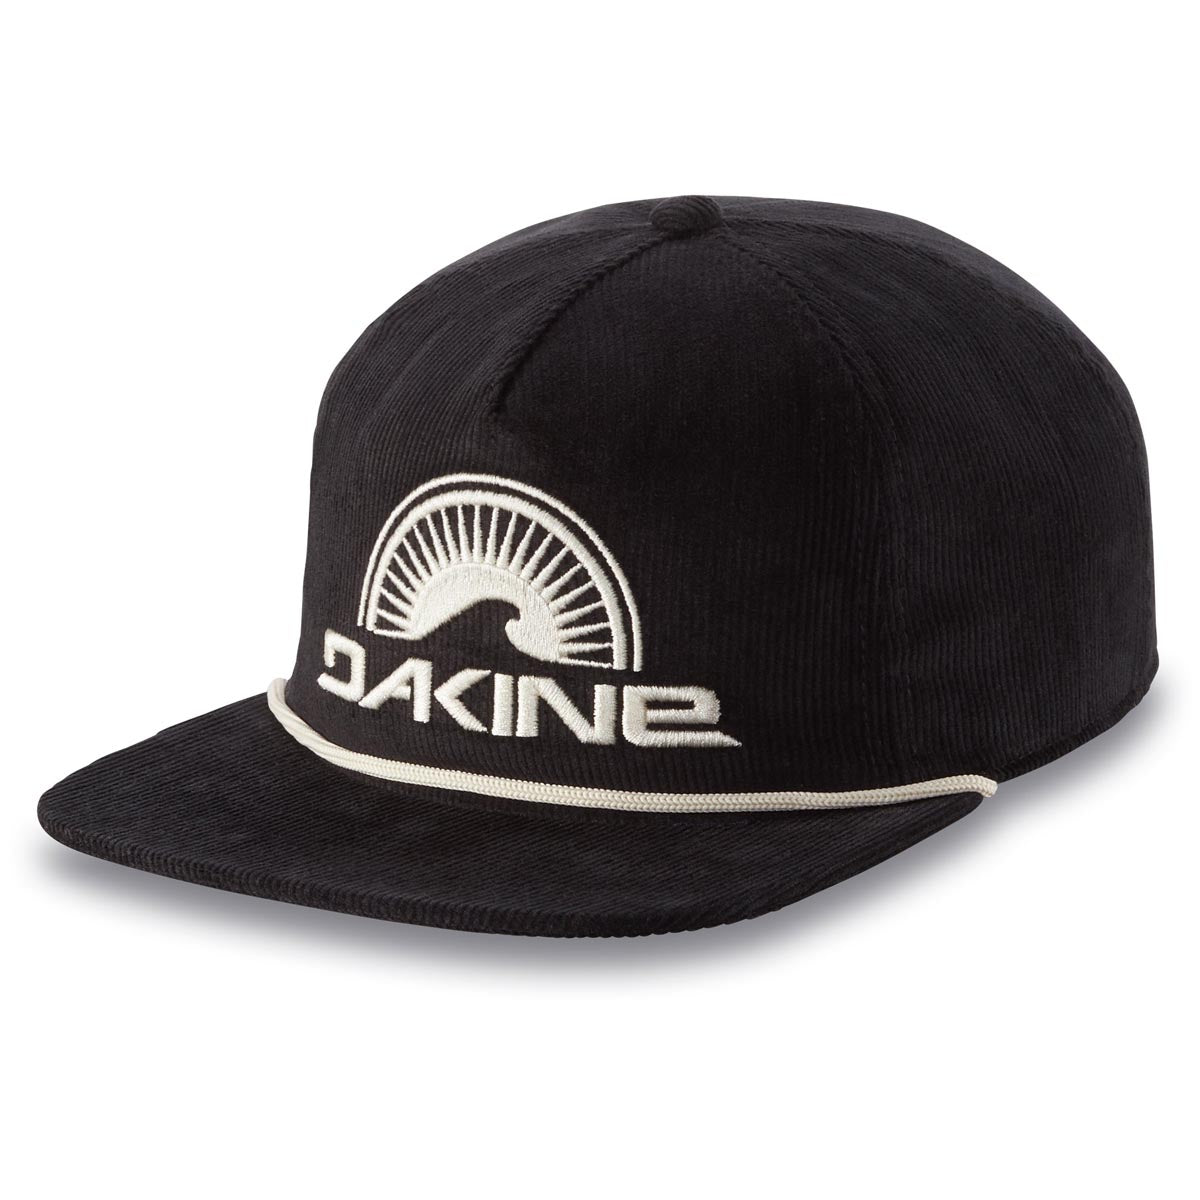 Dakine Tour Unstructured Hat - Black image 1